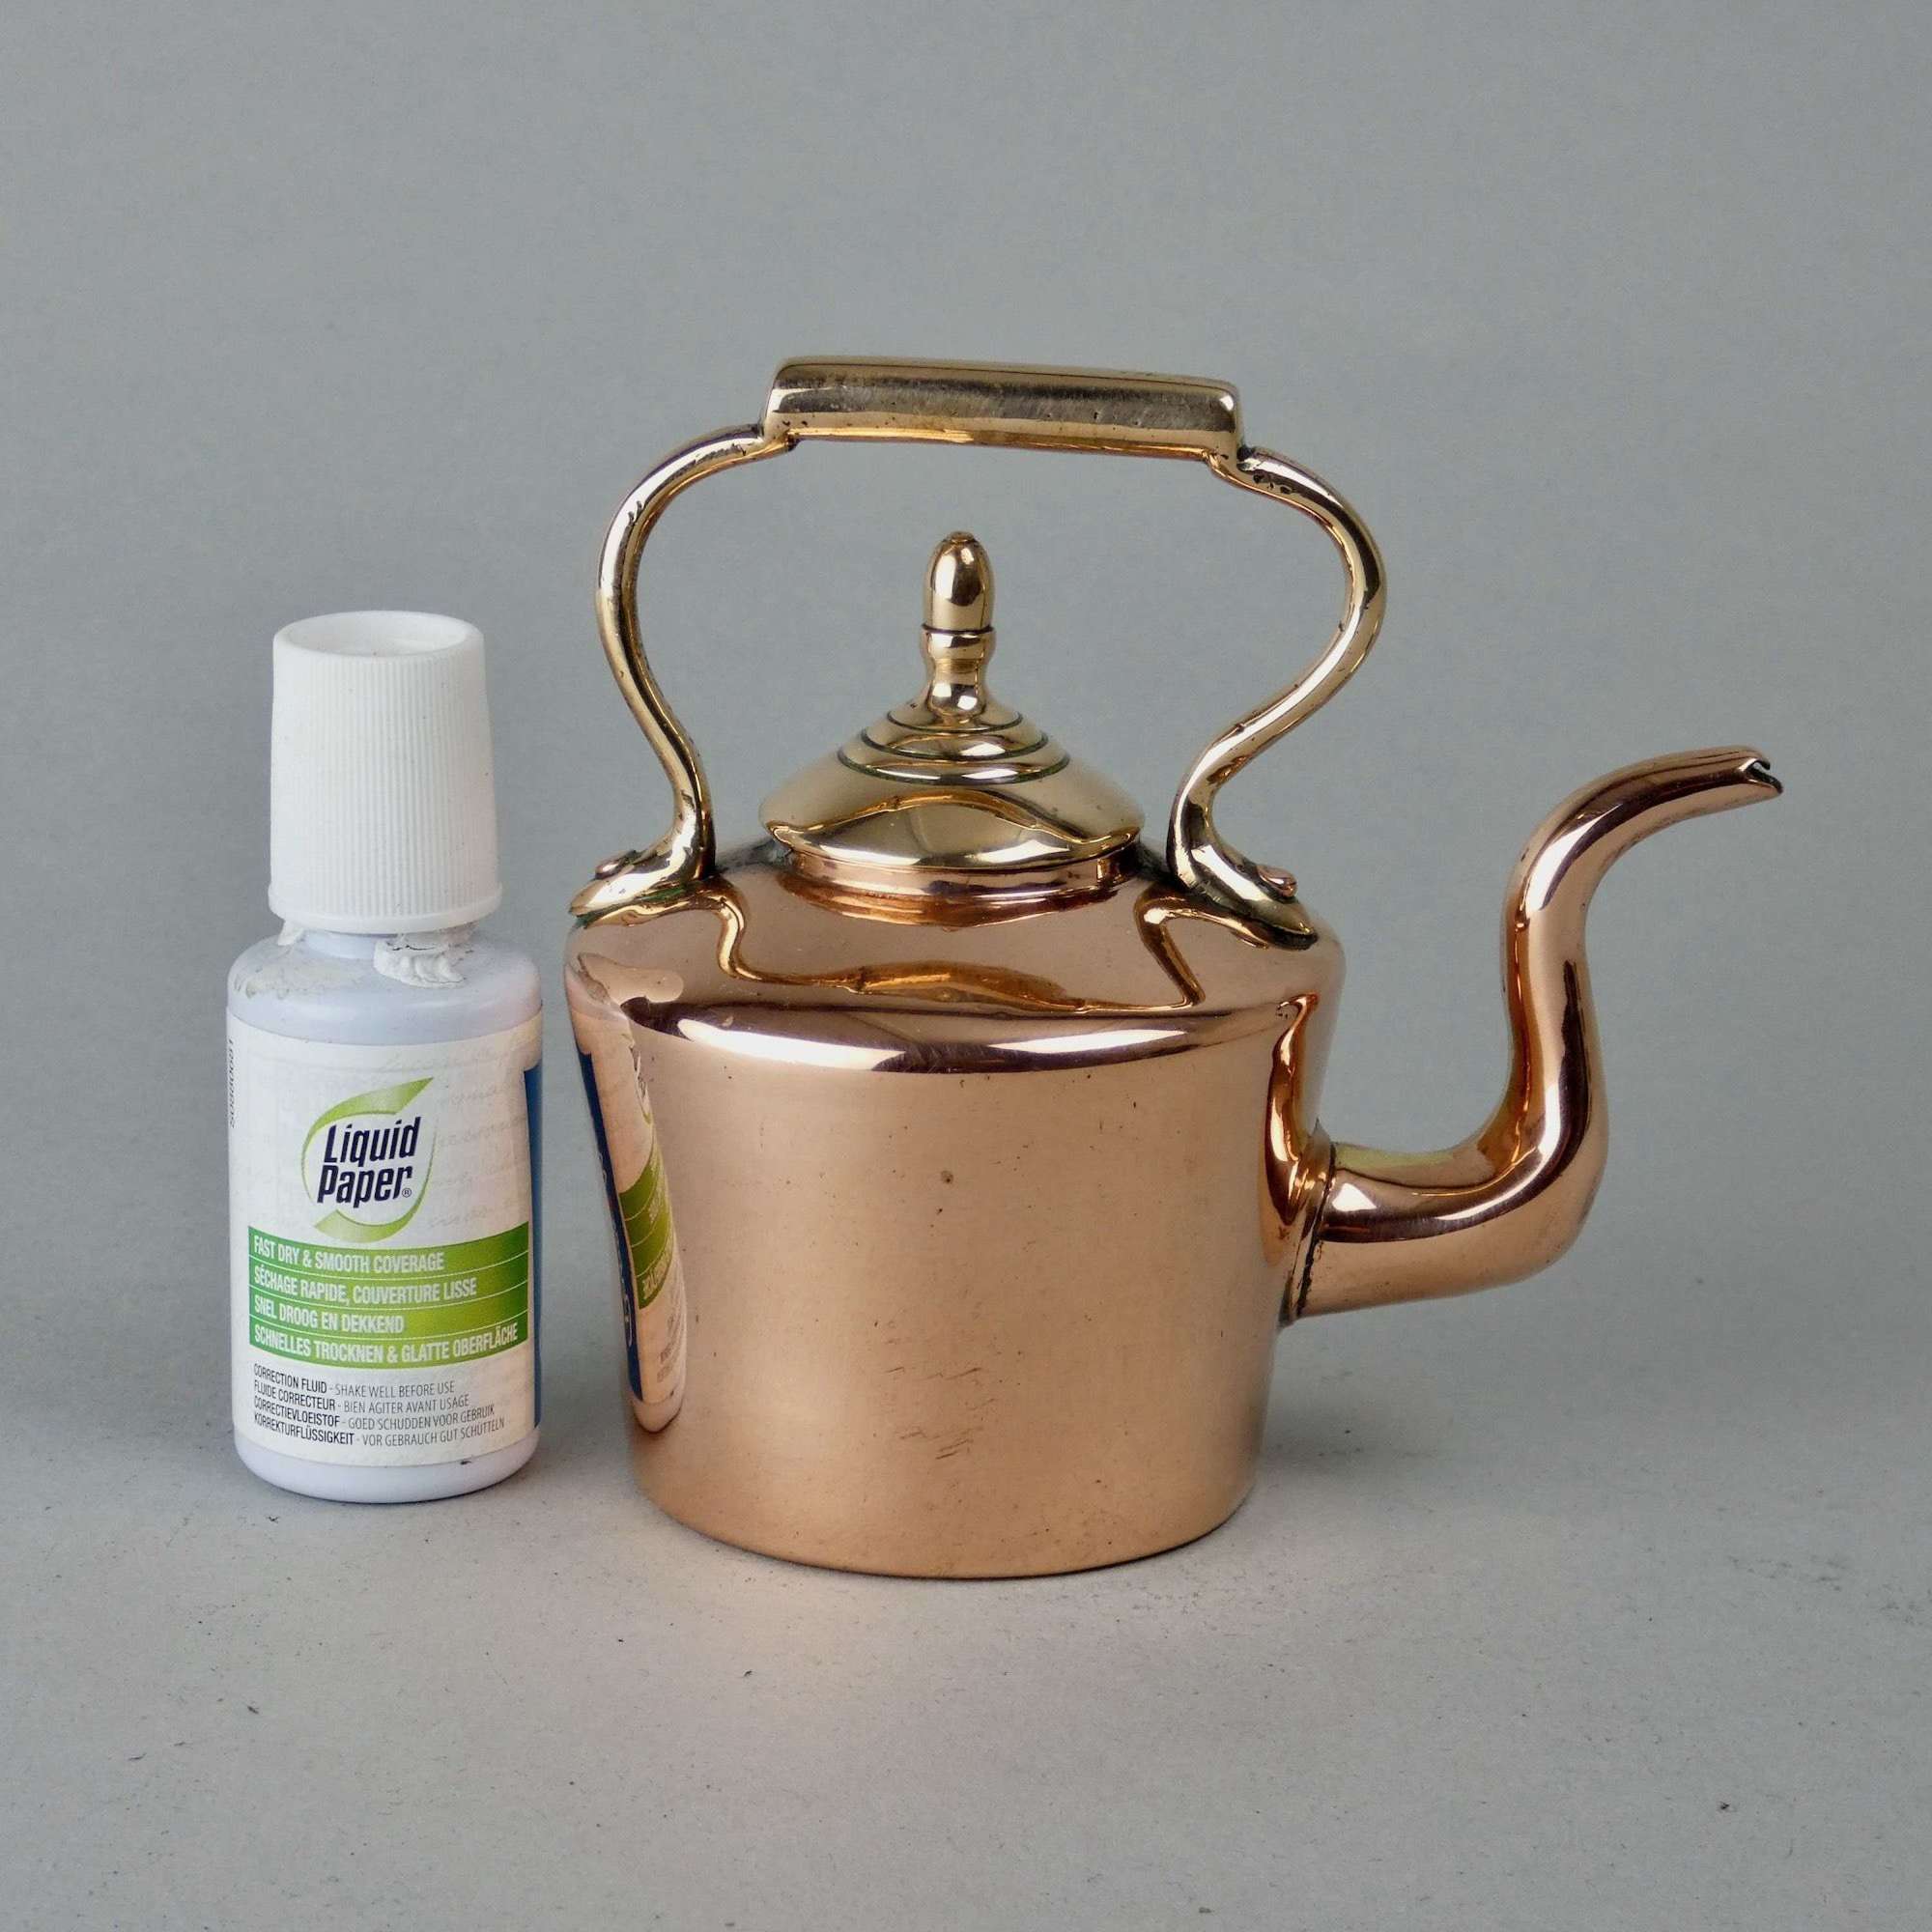 Miniature copper kettle